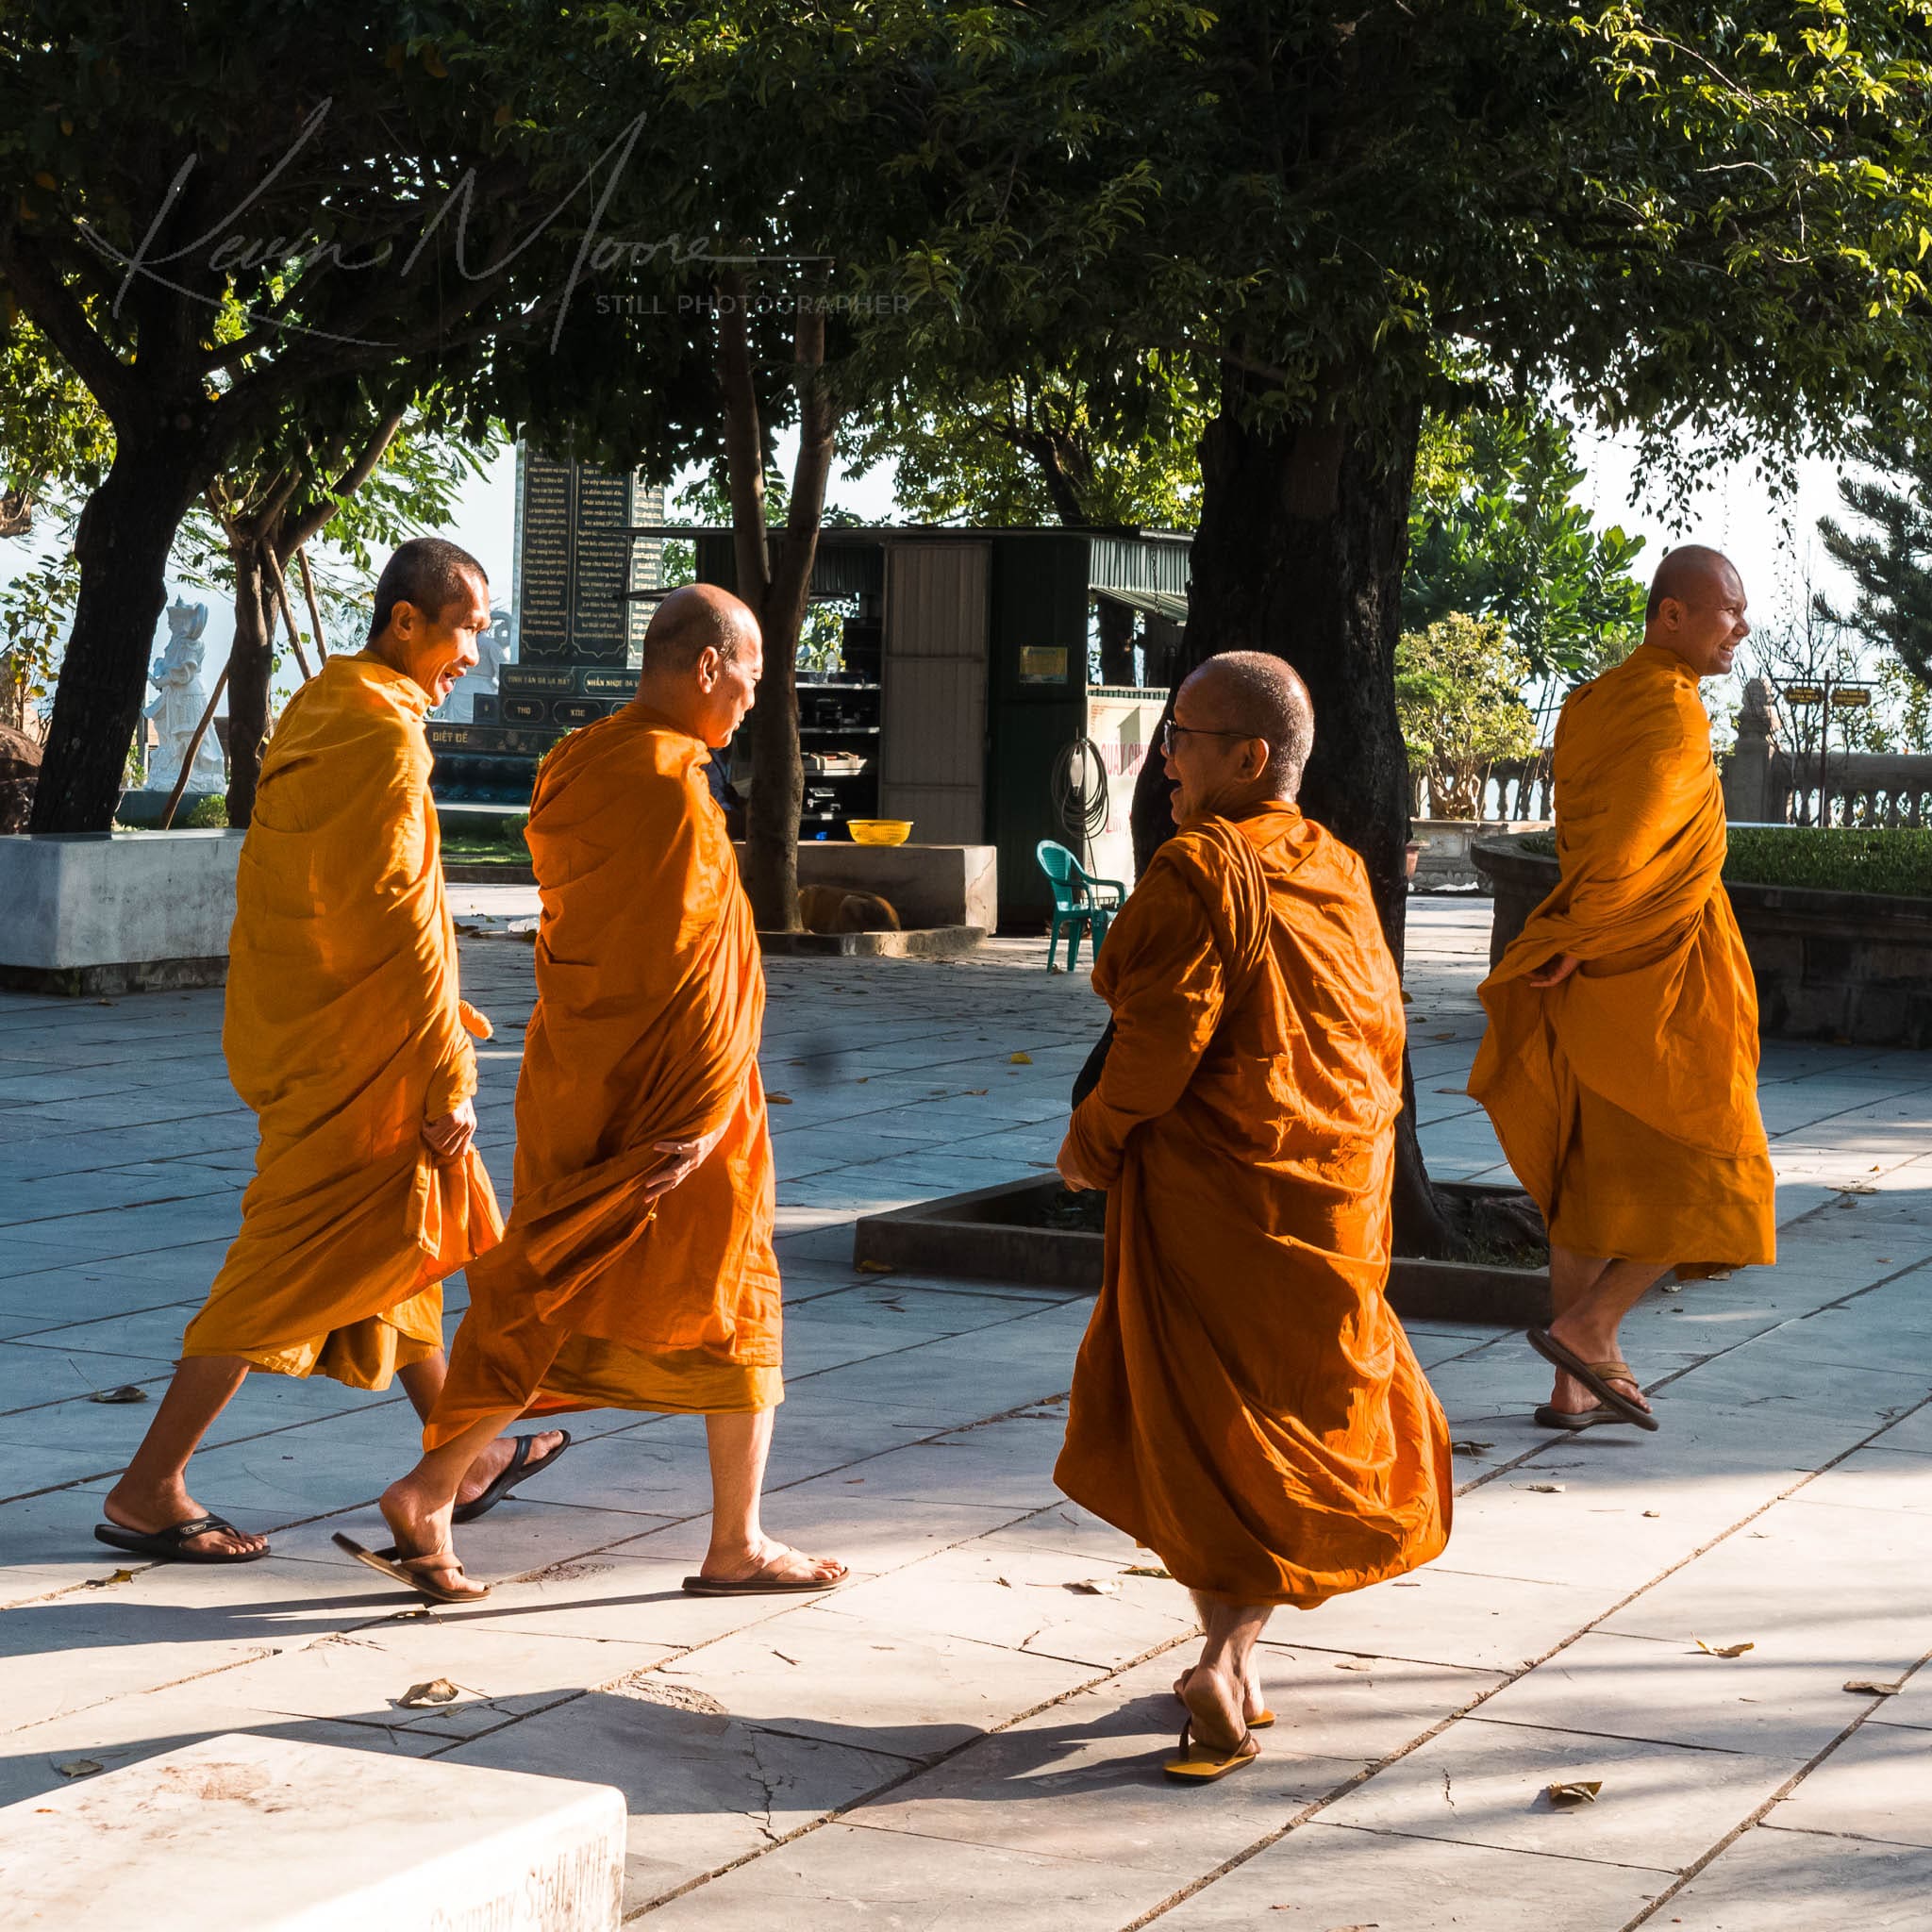 Buddhist monks in saffron robes walking in serene outdoor religious site during golden hour.